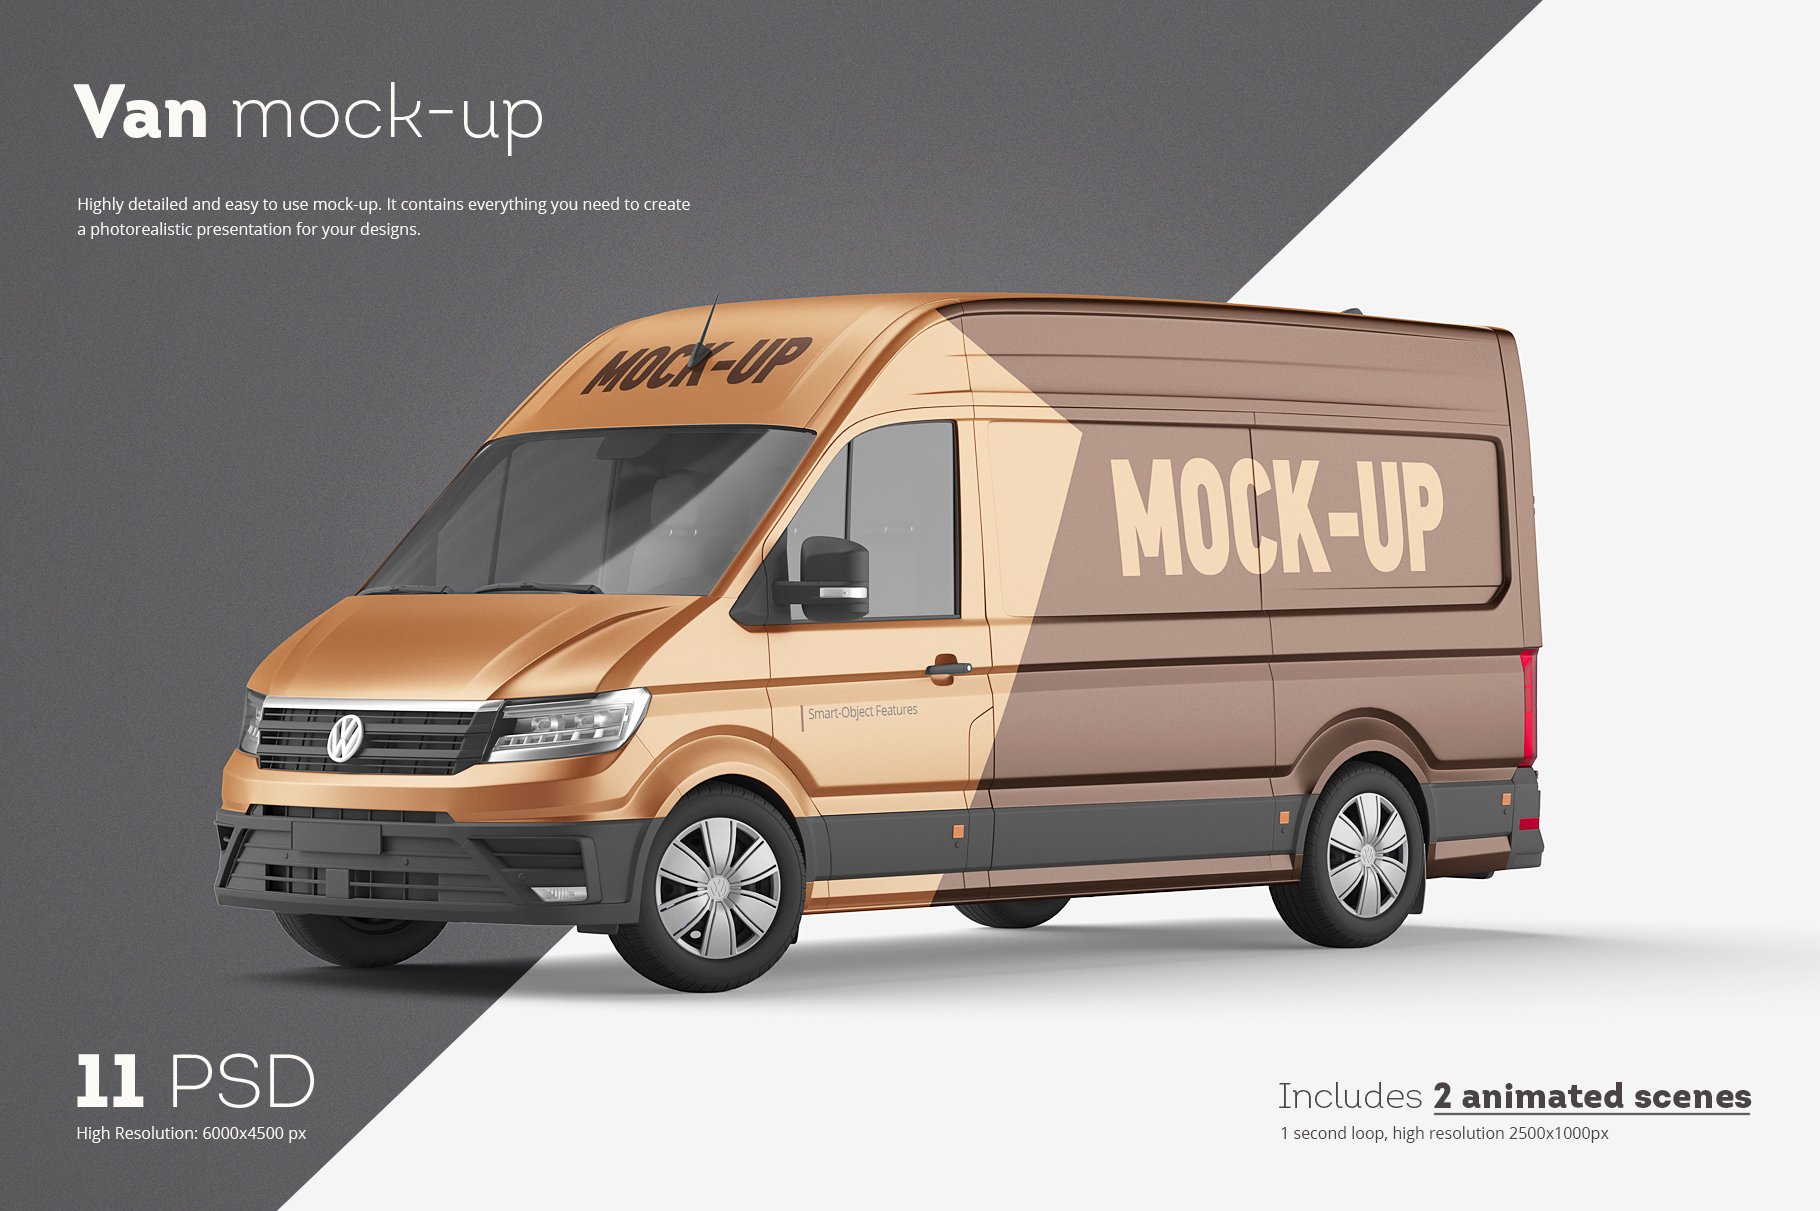 Cargo Van Mockup Set cover image.